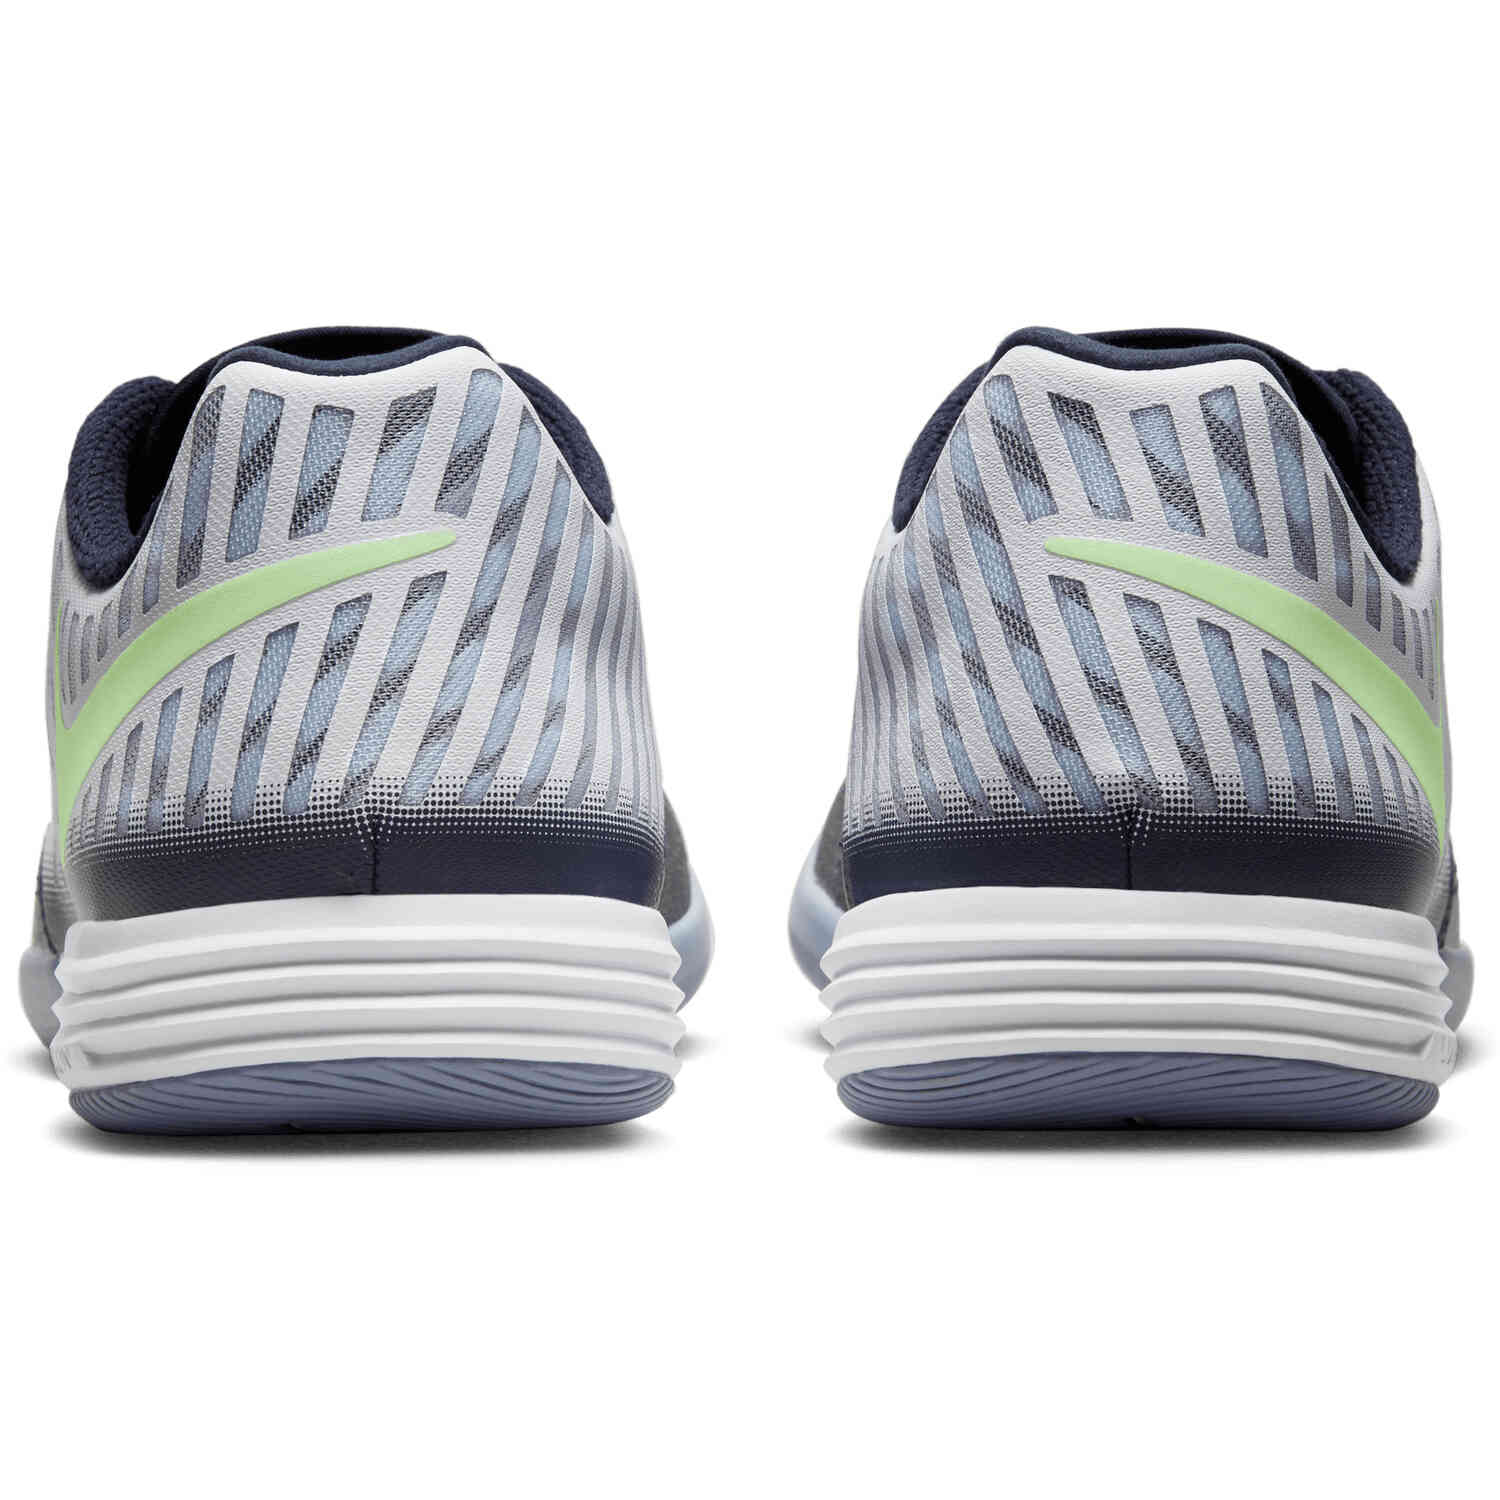 Nike Lunargato II IC – White & Barely Volt with Blackened Blue